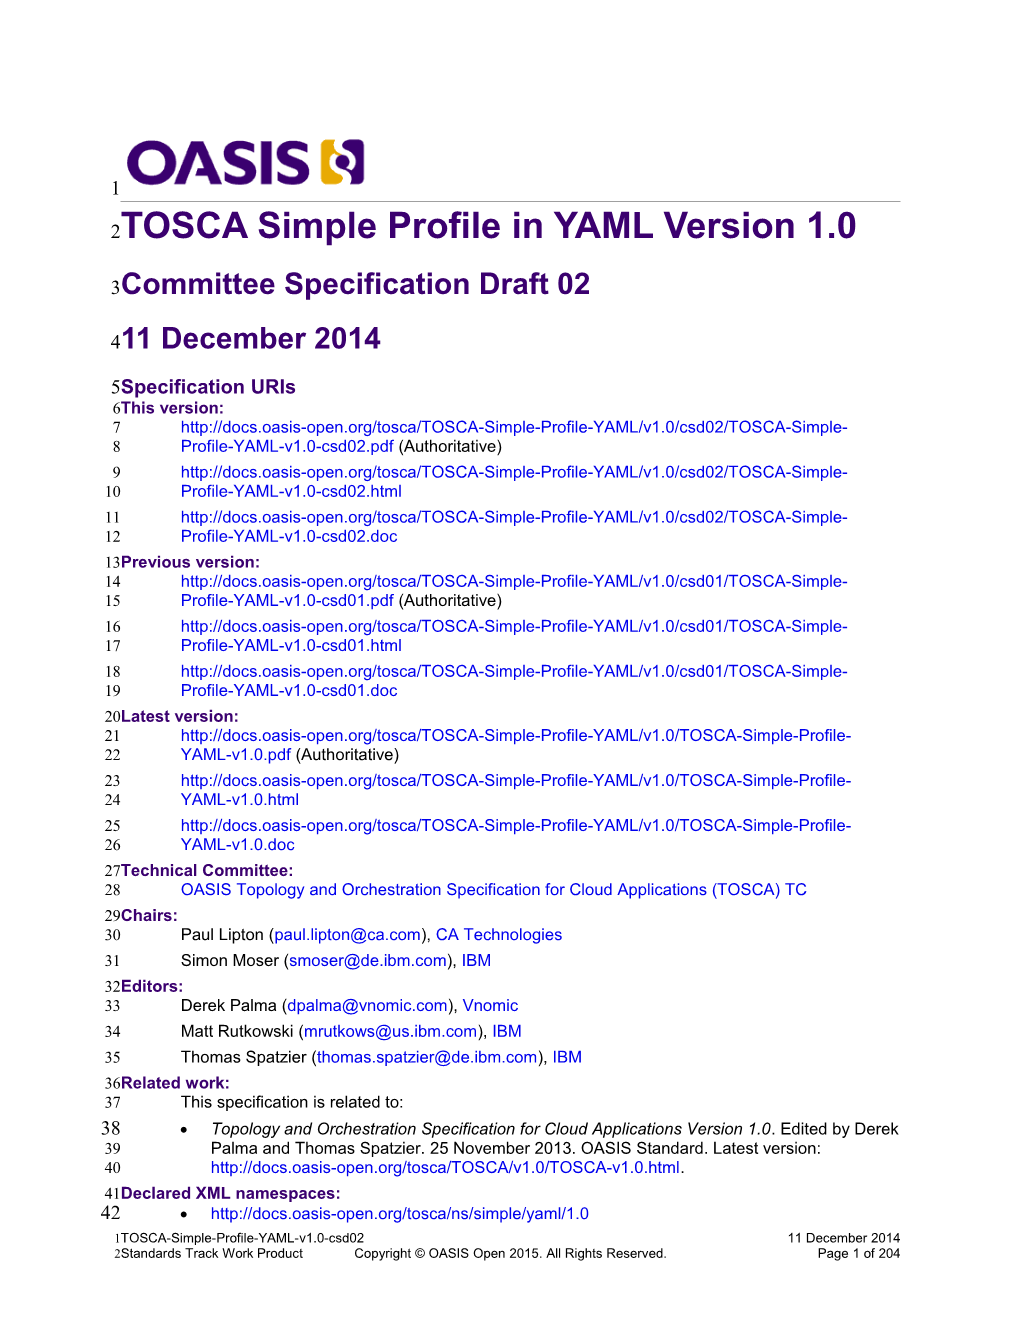 TOSCA Simple Profile In YAML Version 1.0